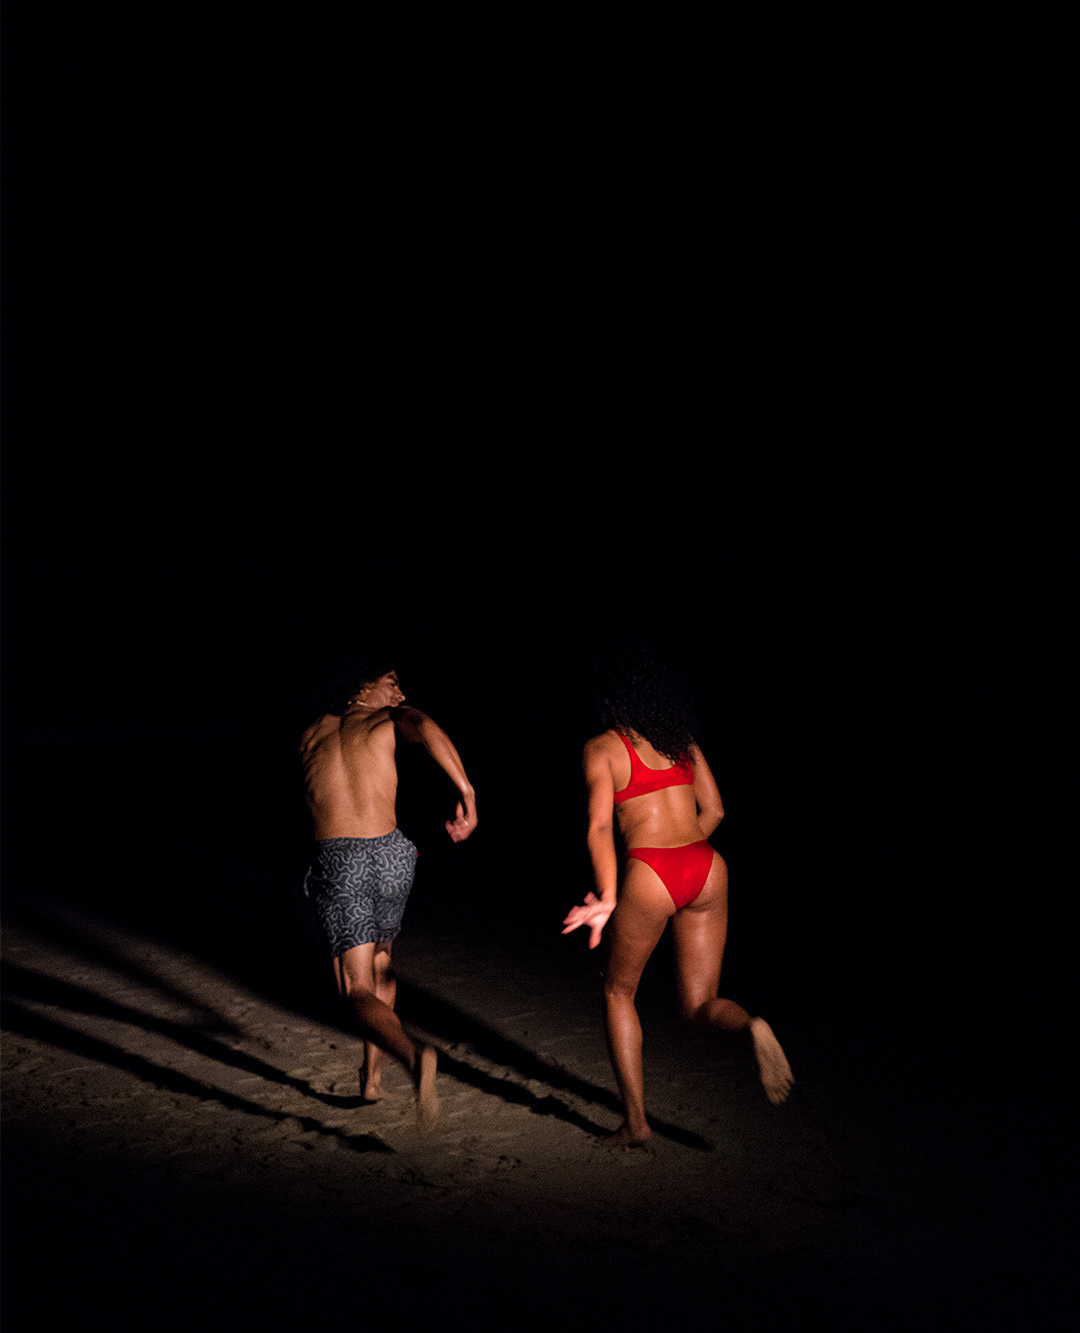 reef beach woman model bikini swim la Los Angeles Ocean night